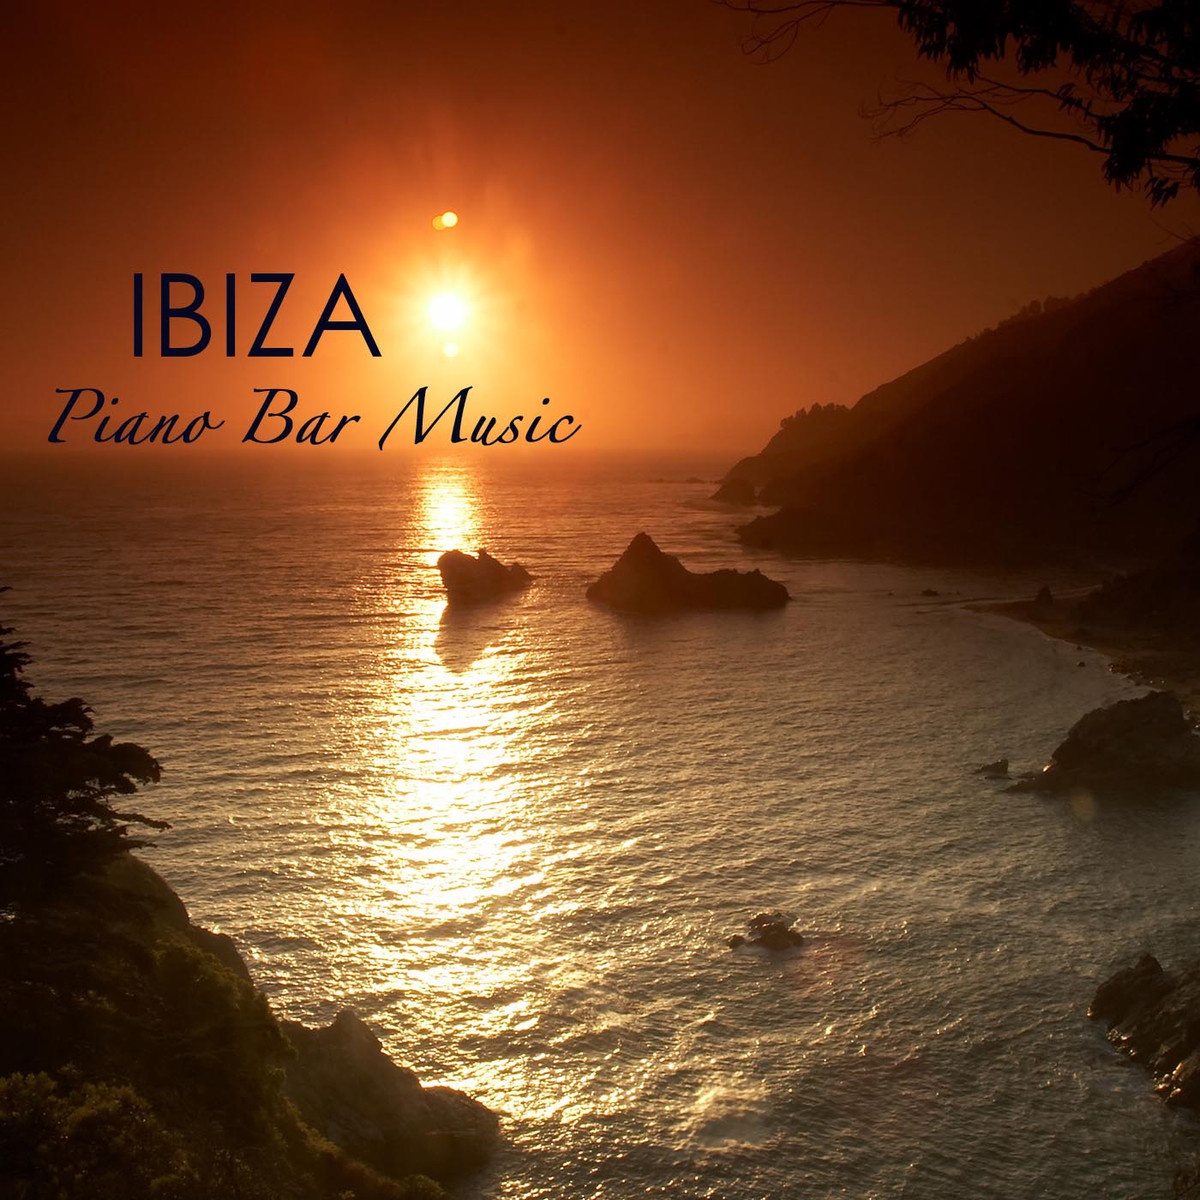 Secret Life of the Sea (Ibiza 2013 Piano Bar Music)